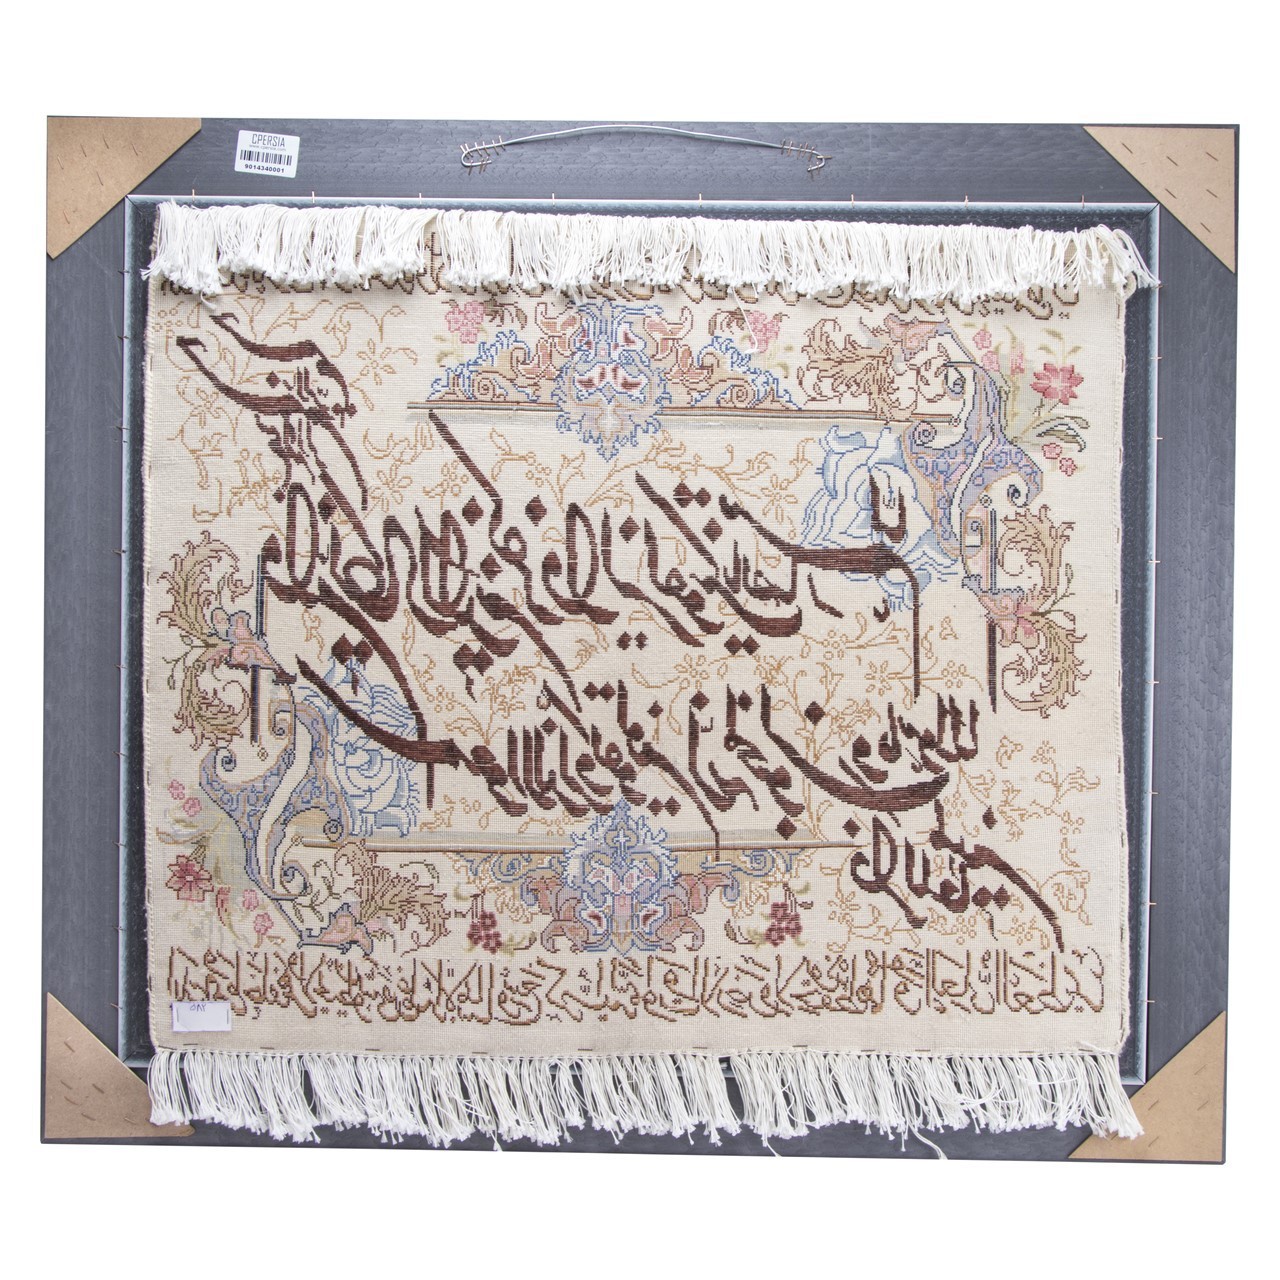 Pictorial Tabriz Carpet Ref: 901434